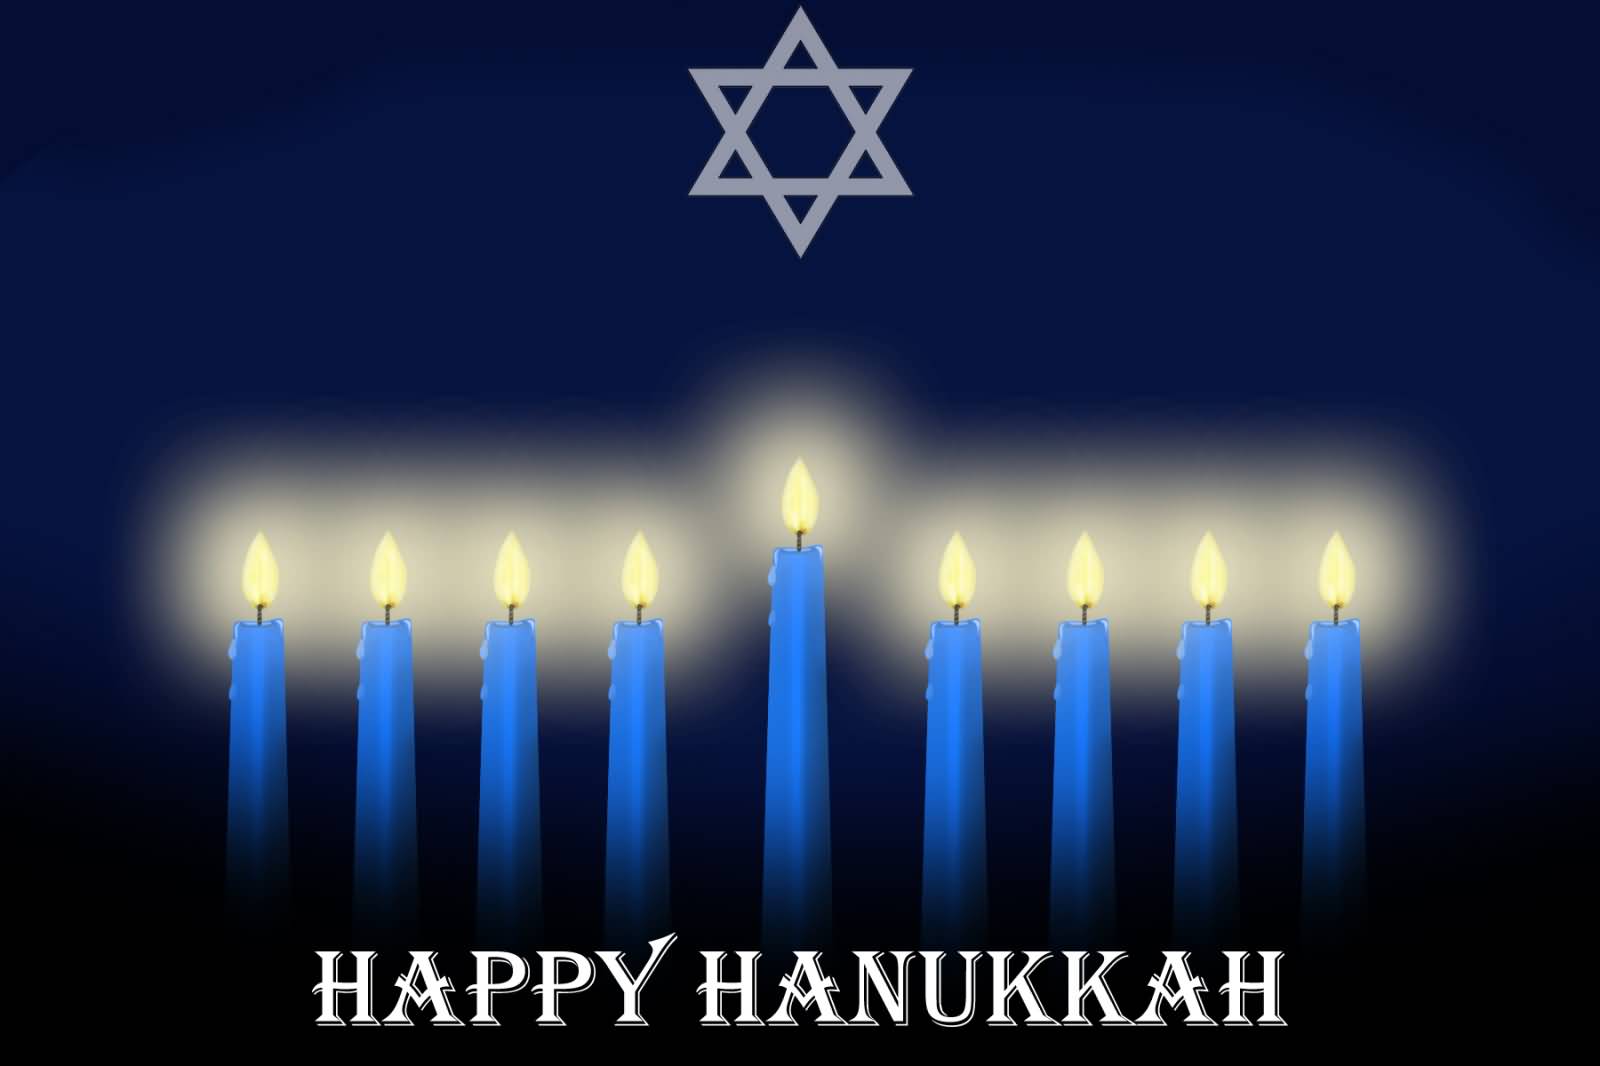 Happy Hanukkah Candles Illustration